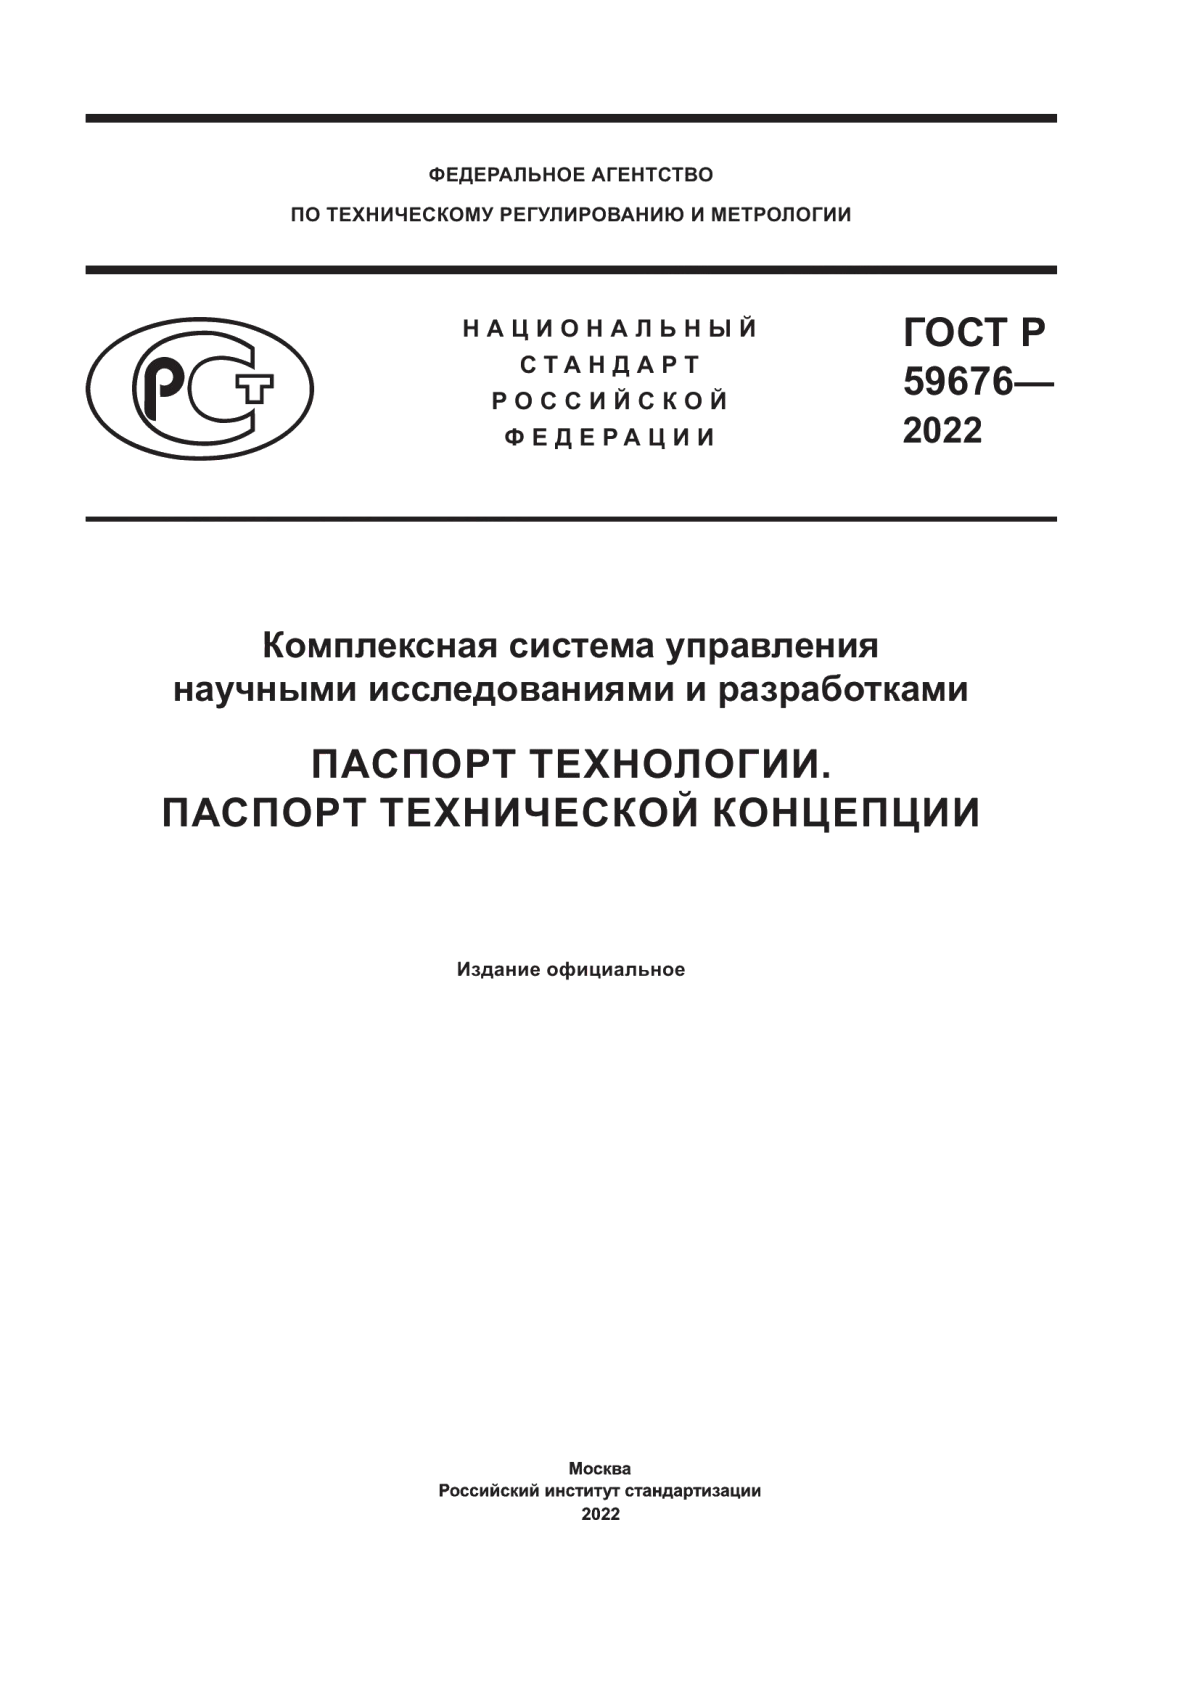 ГОСТ Р 59676-2022 Комплексная система управления научными исследованиями и разработками. Паспорт технологии. Паспорт технической концепции